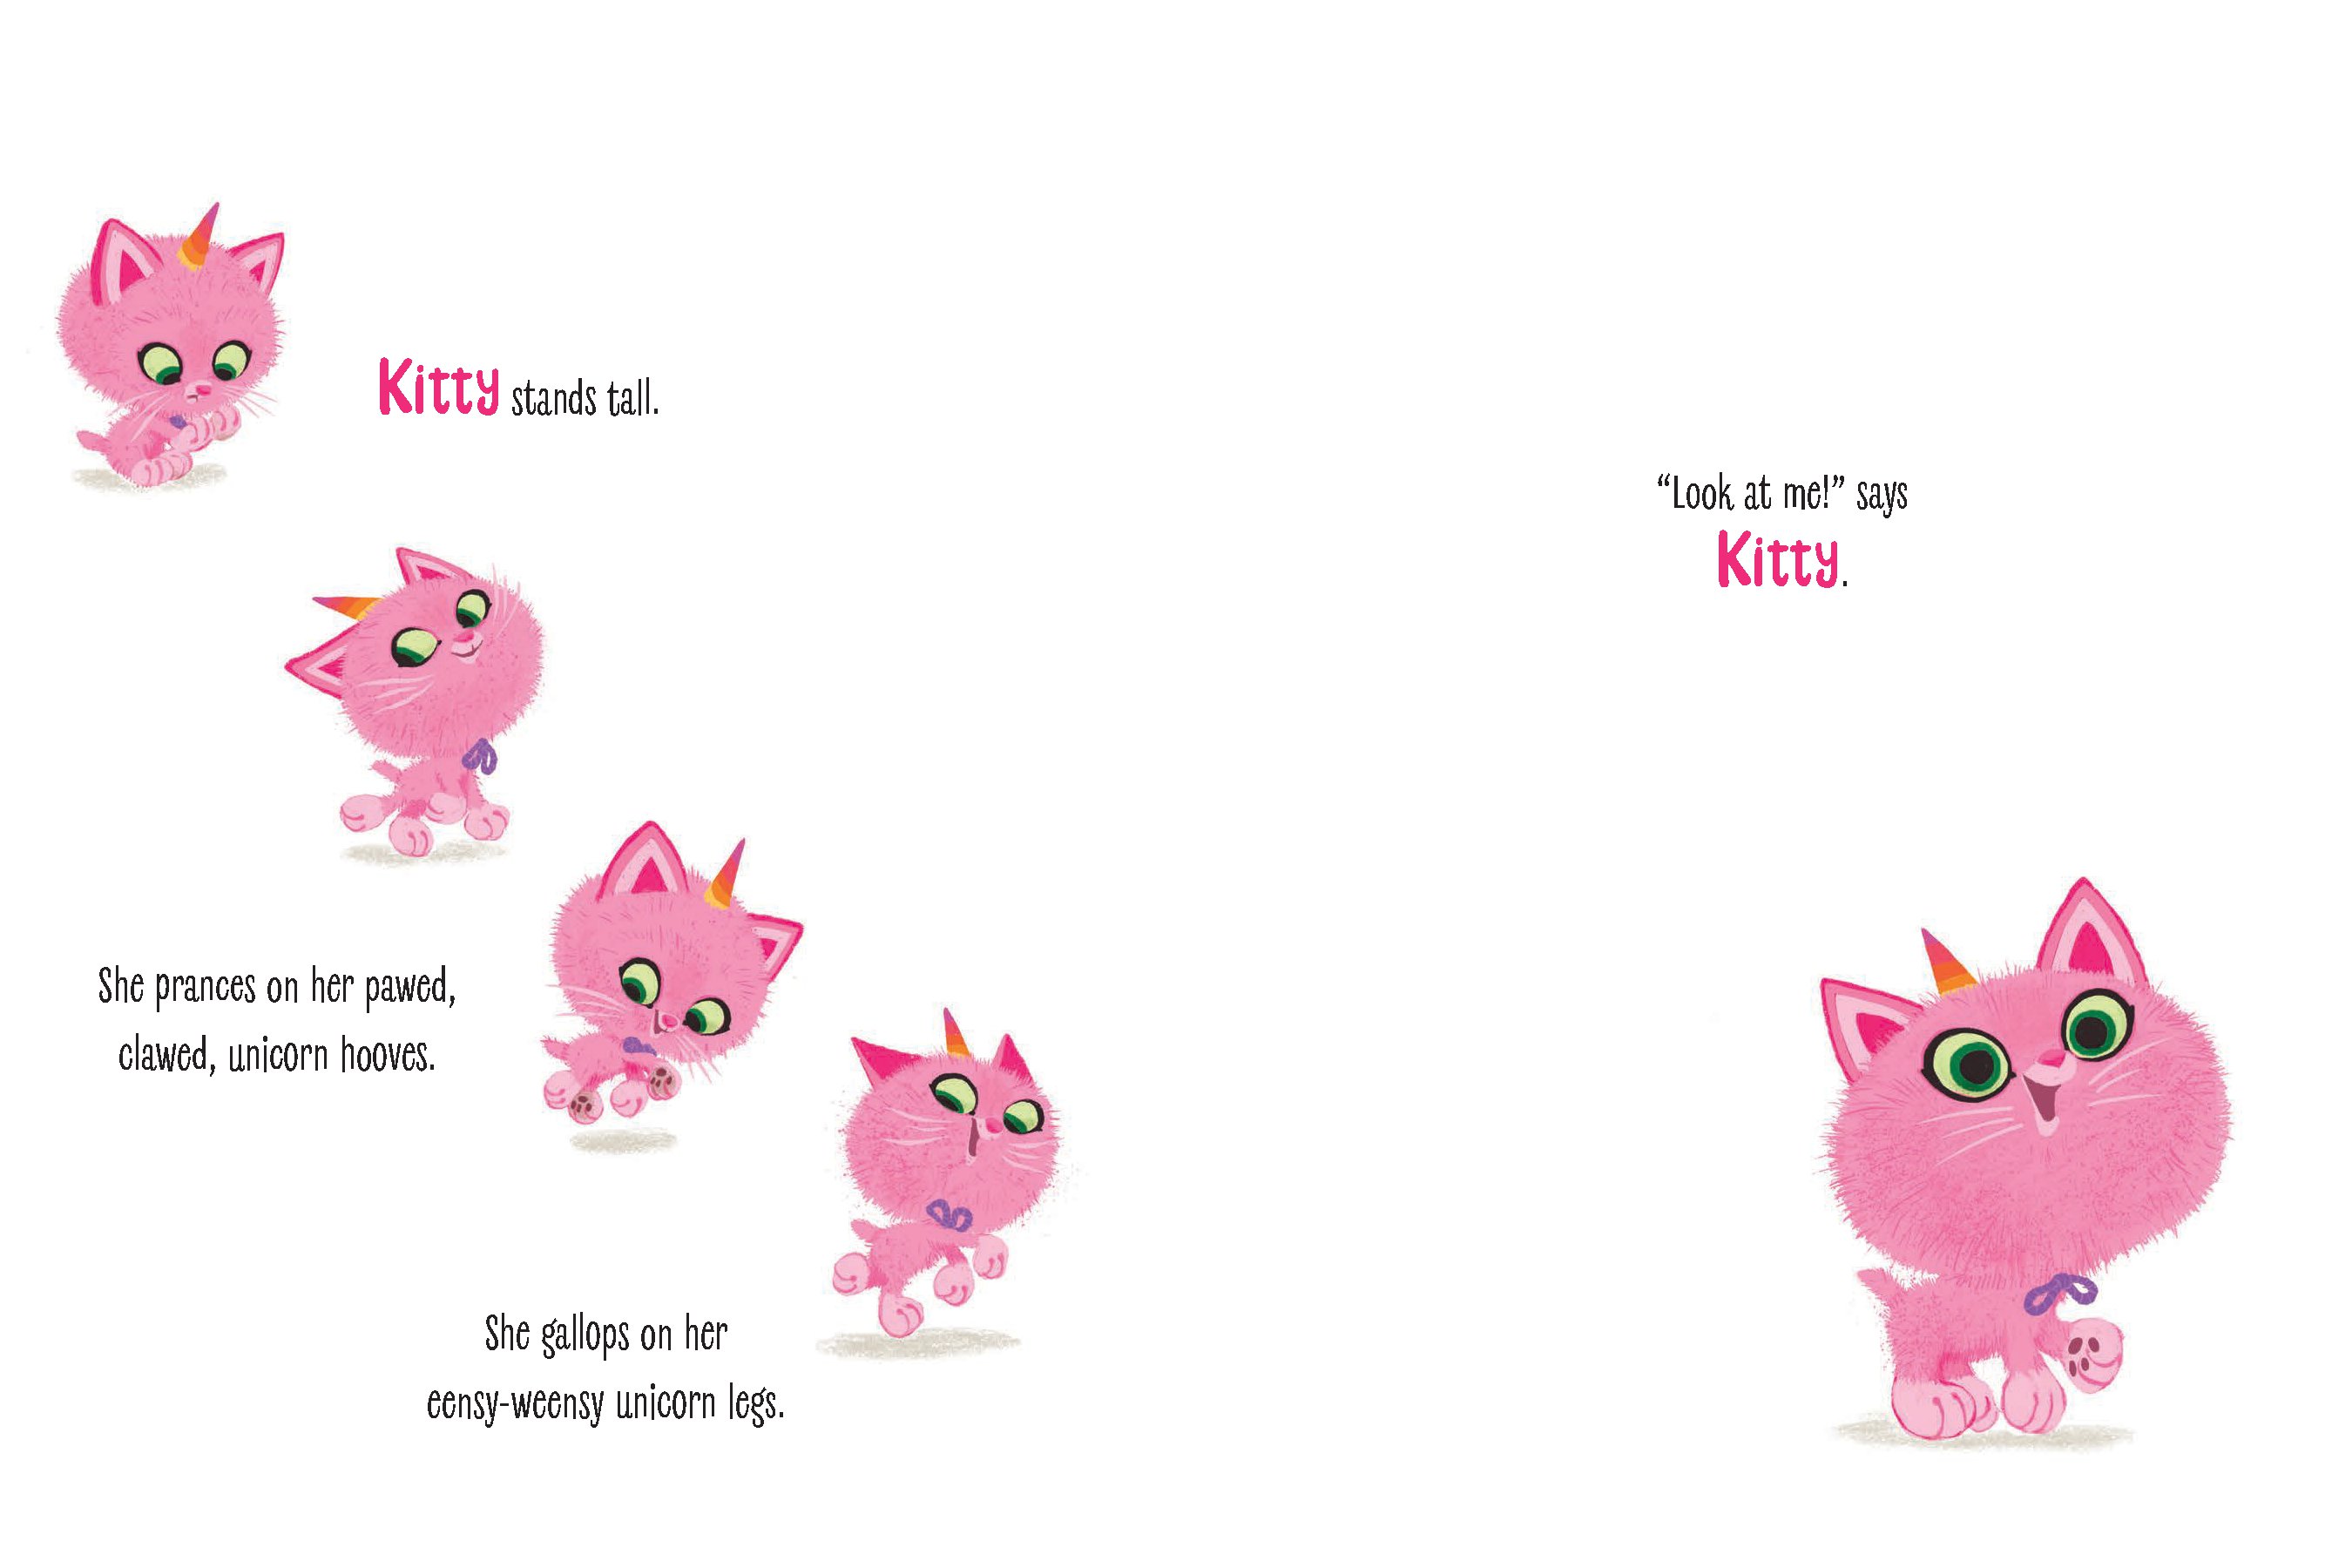 Itty-Bitty Kitty-Corn